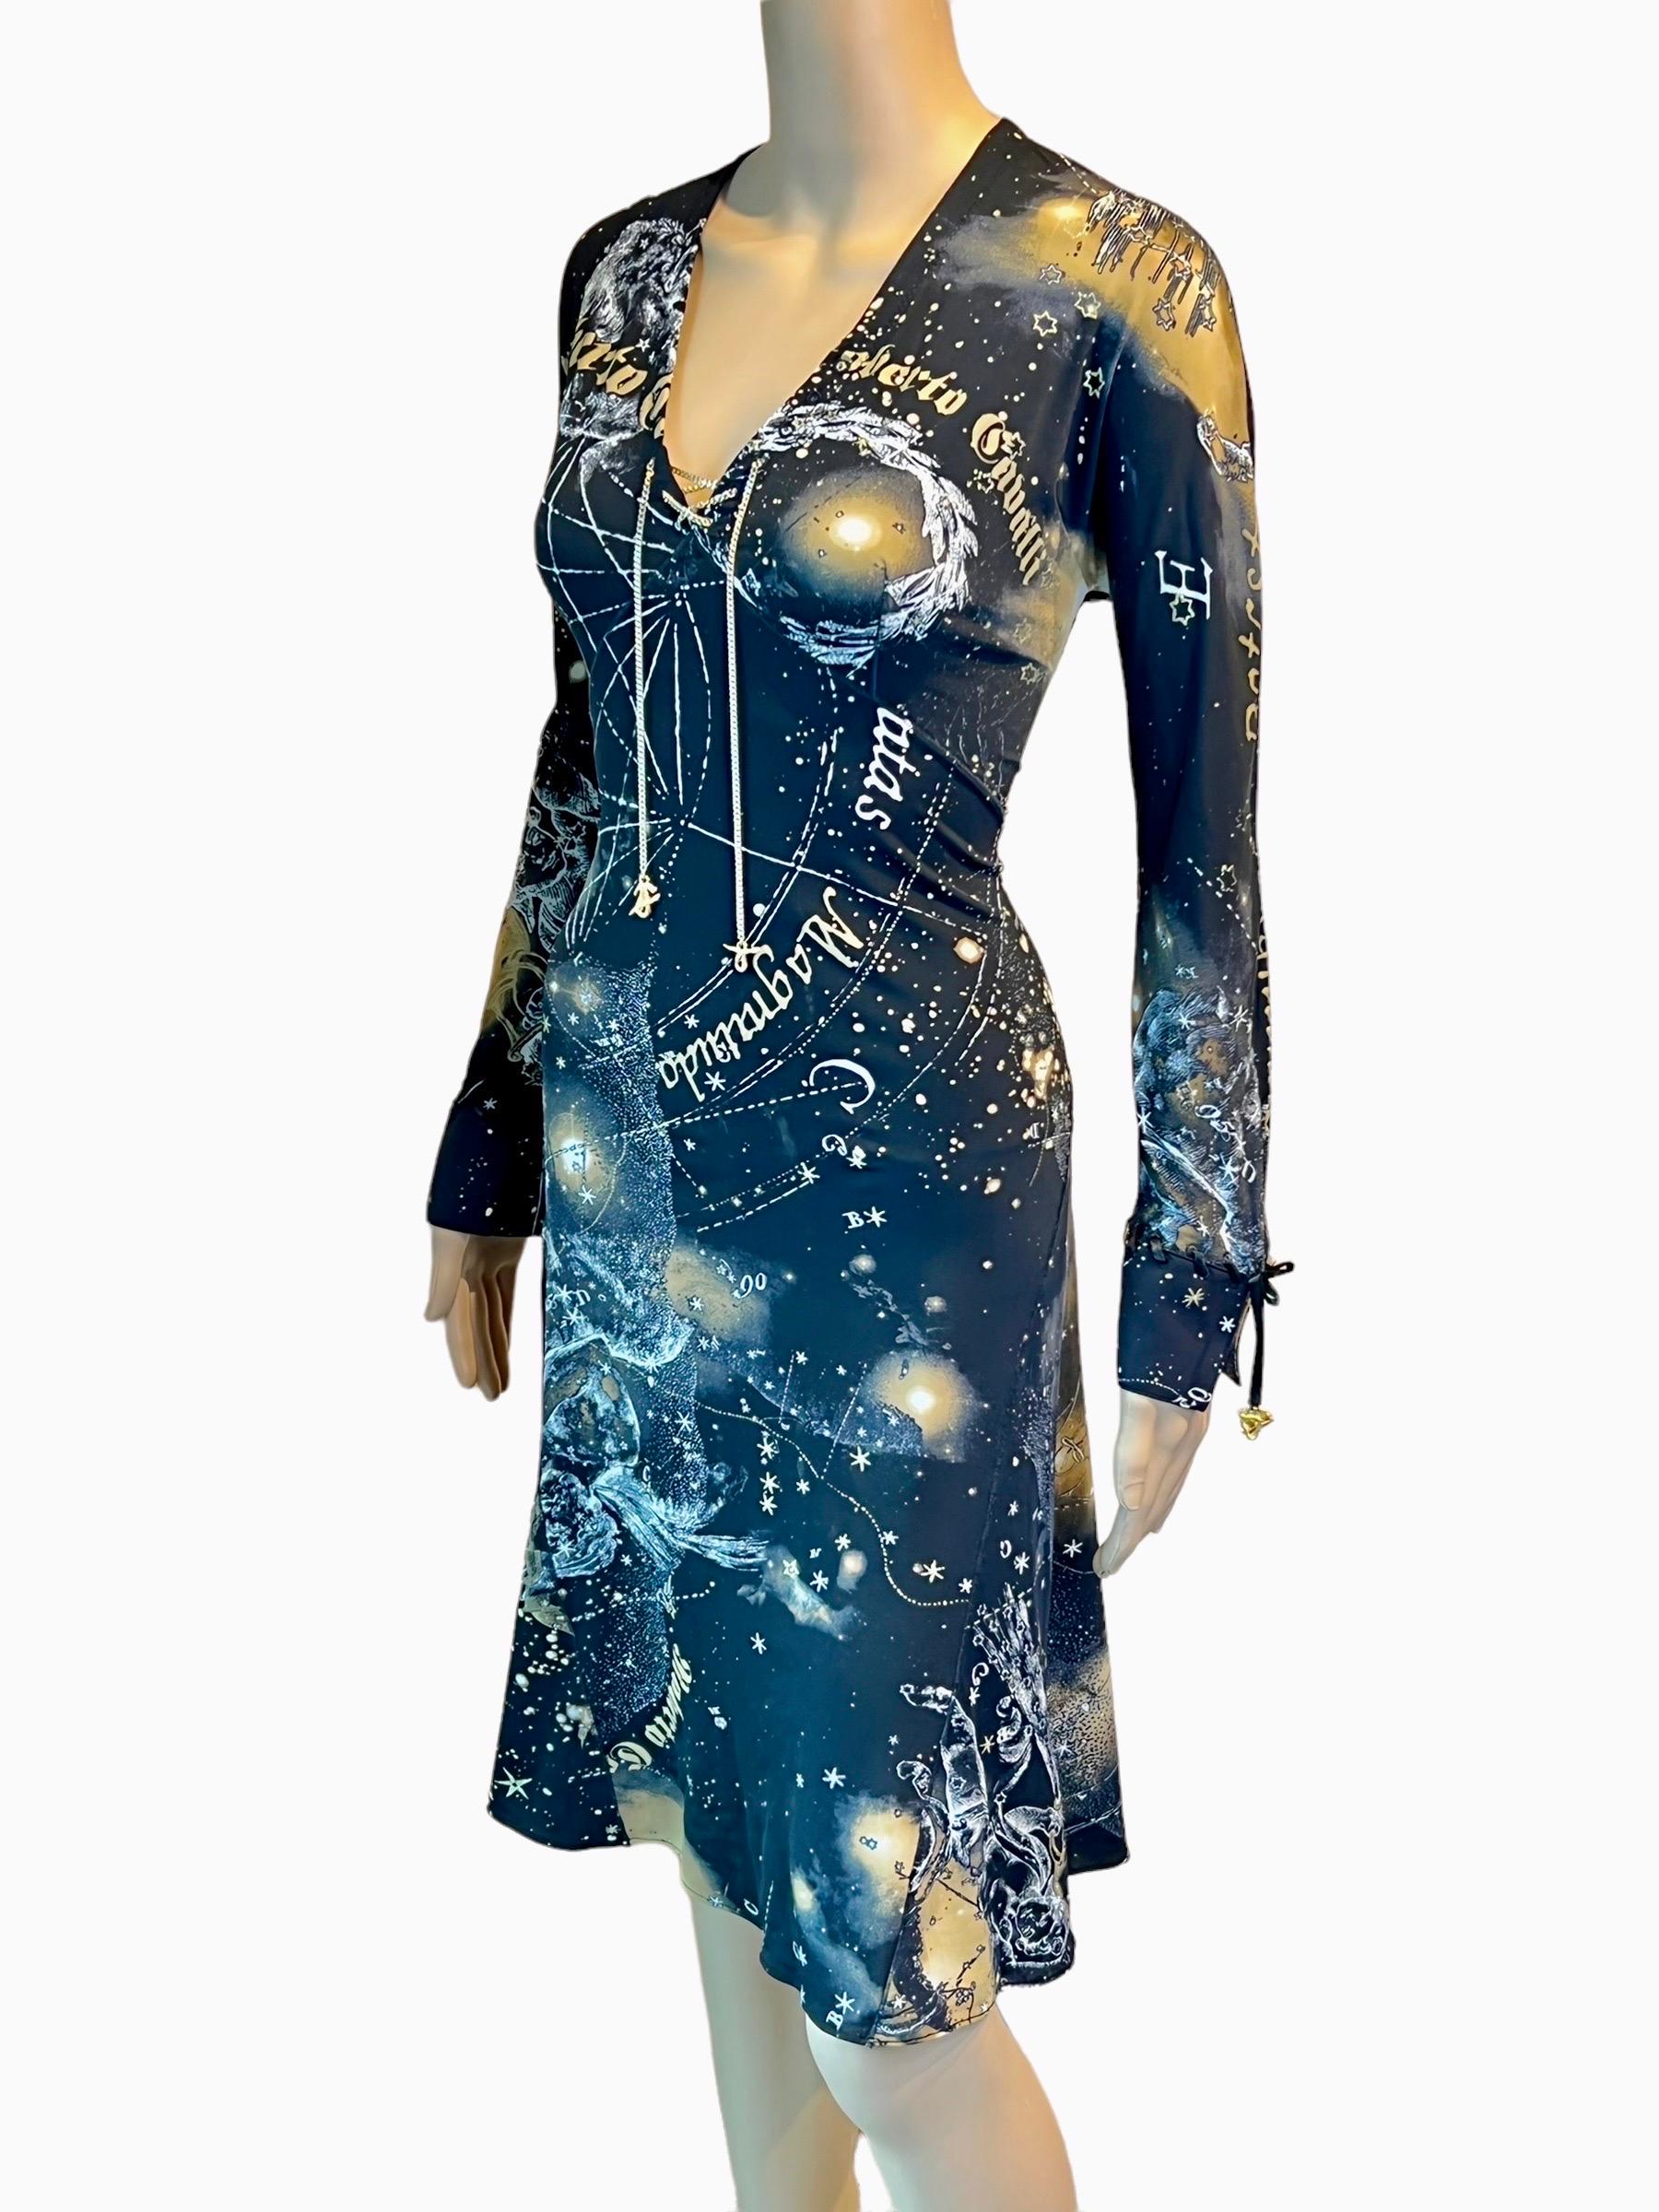 Roberto Cavalli F/W 2003 Lace Up Chain Constellation Astrology Print Dress Size L